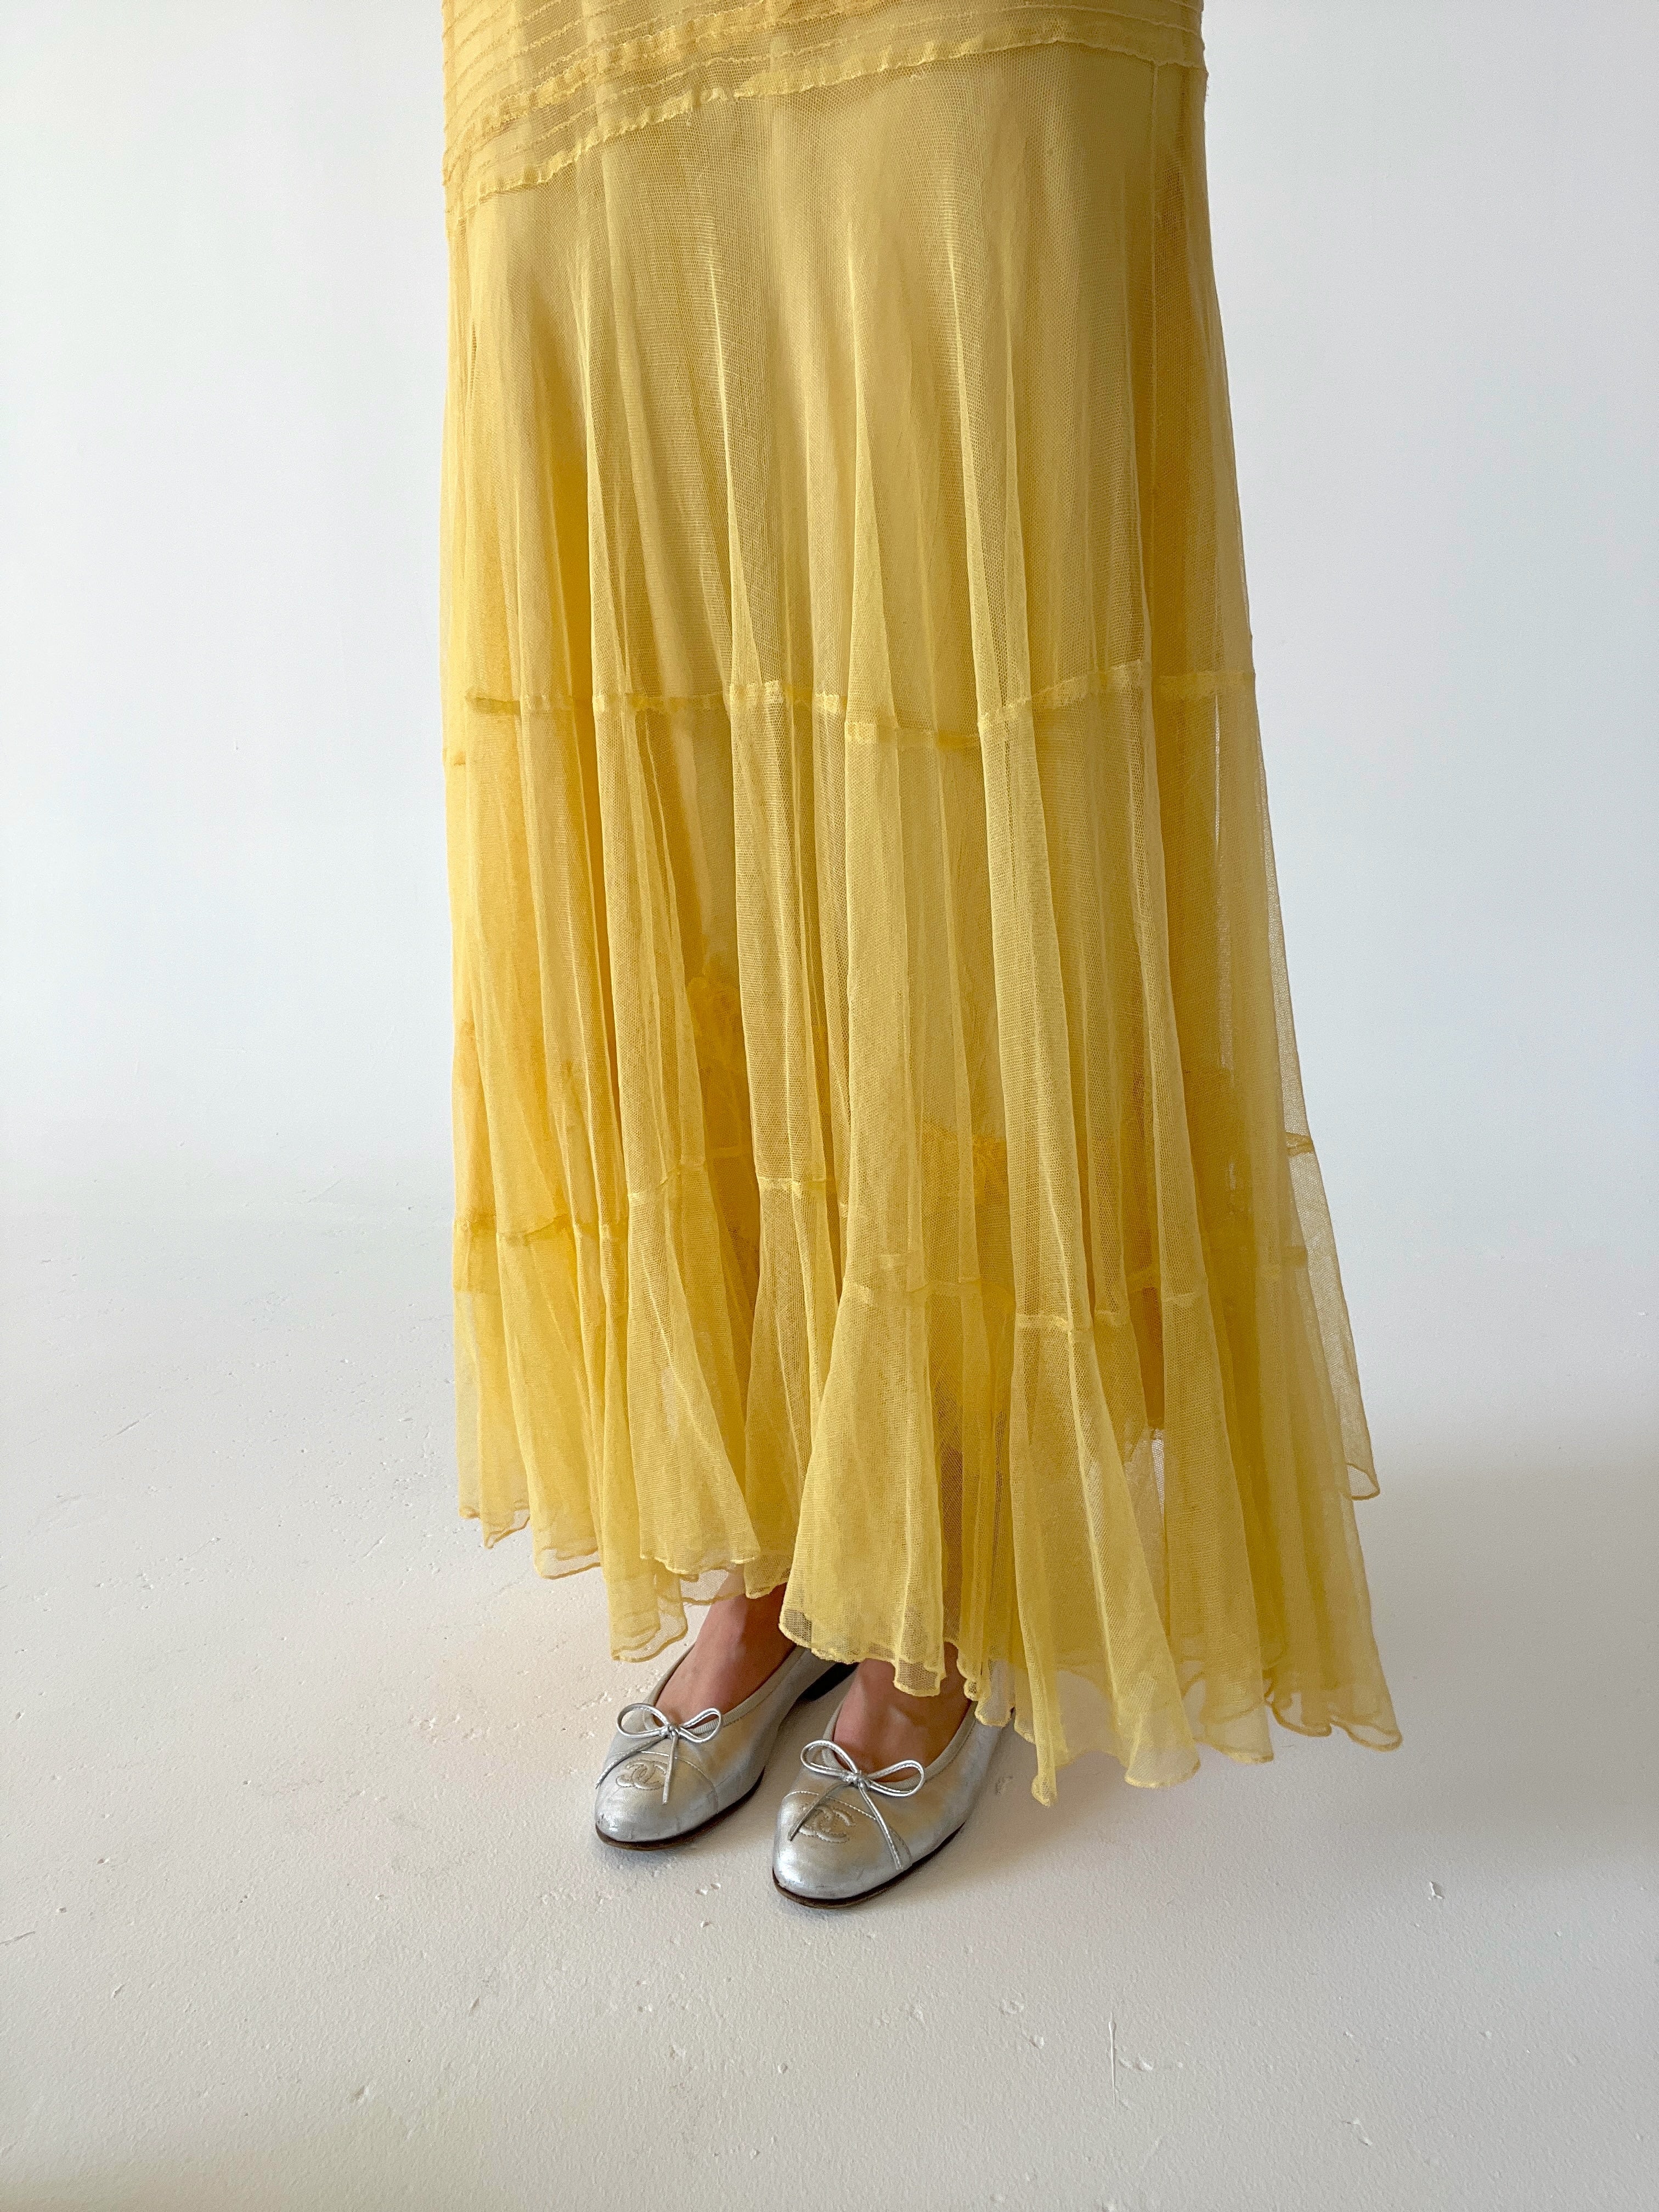 1930's Yellow Net Dress